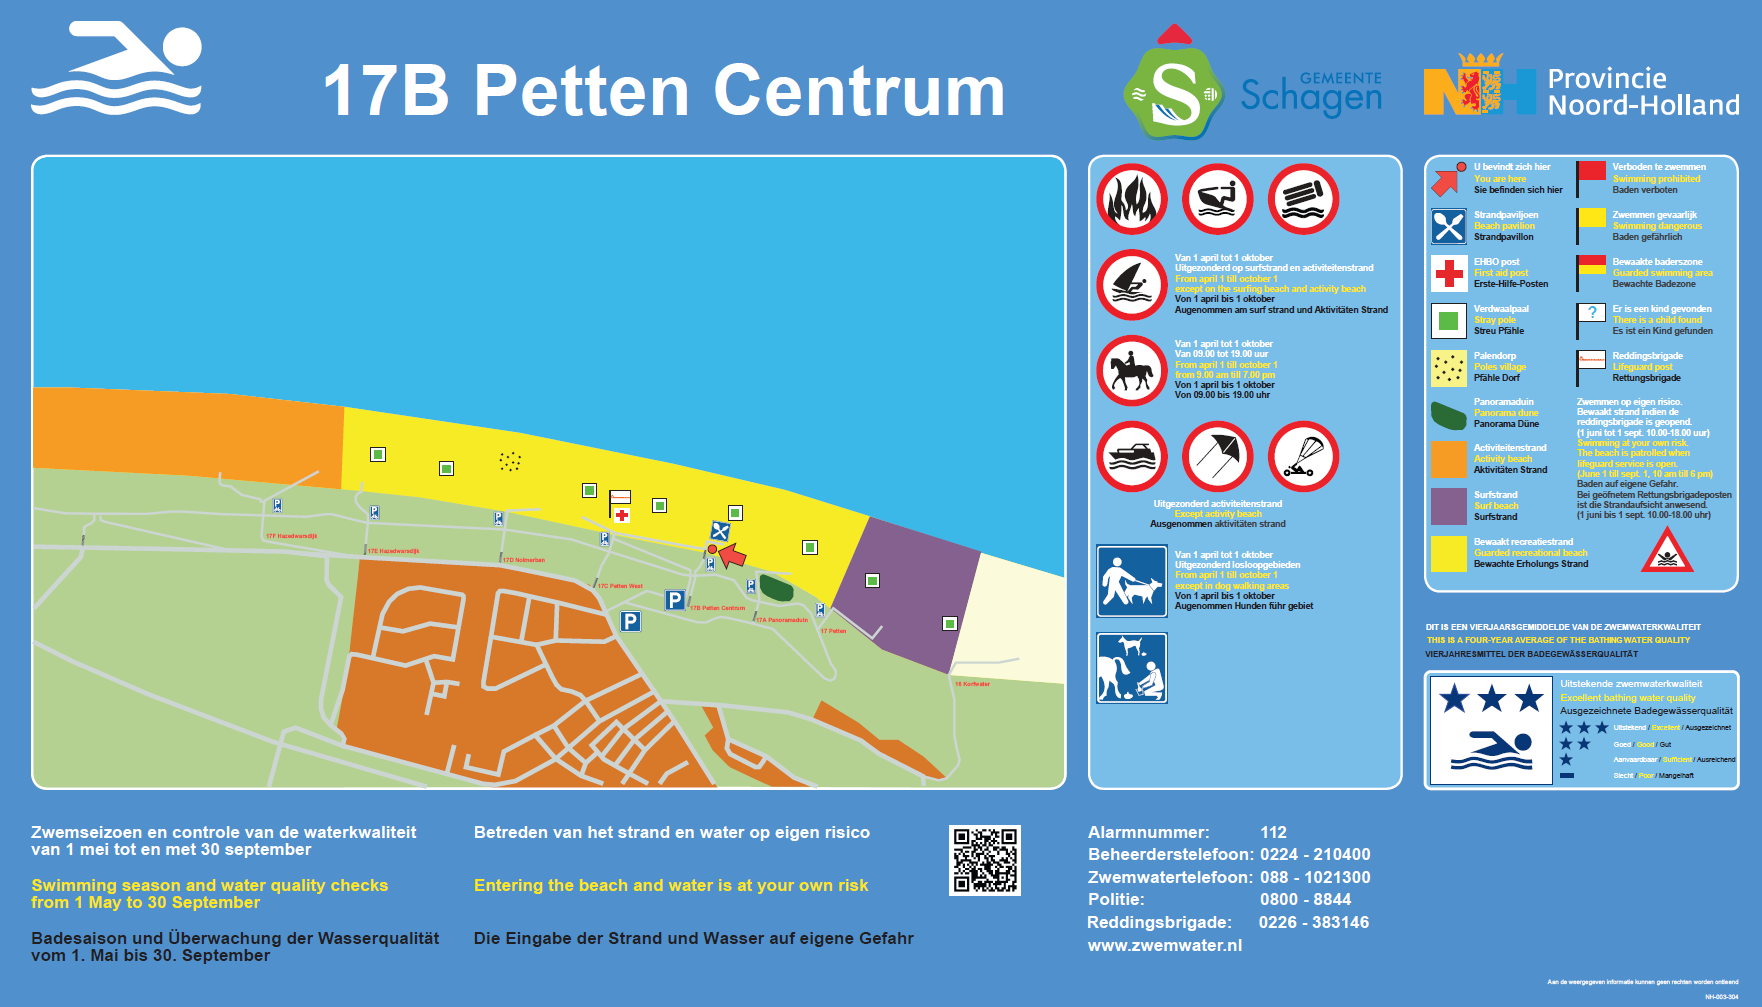 The information board at the swimming location Petten Centrum